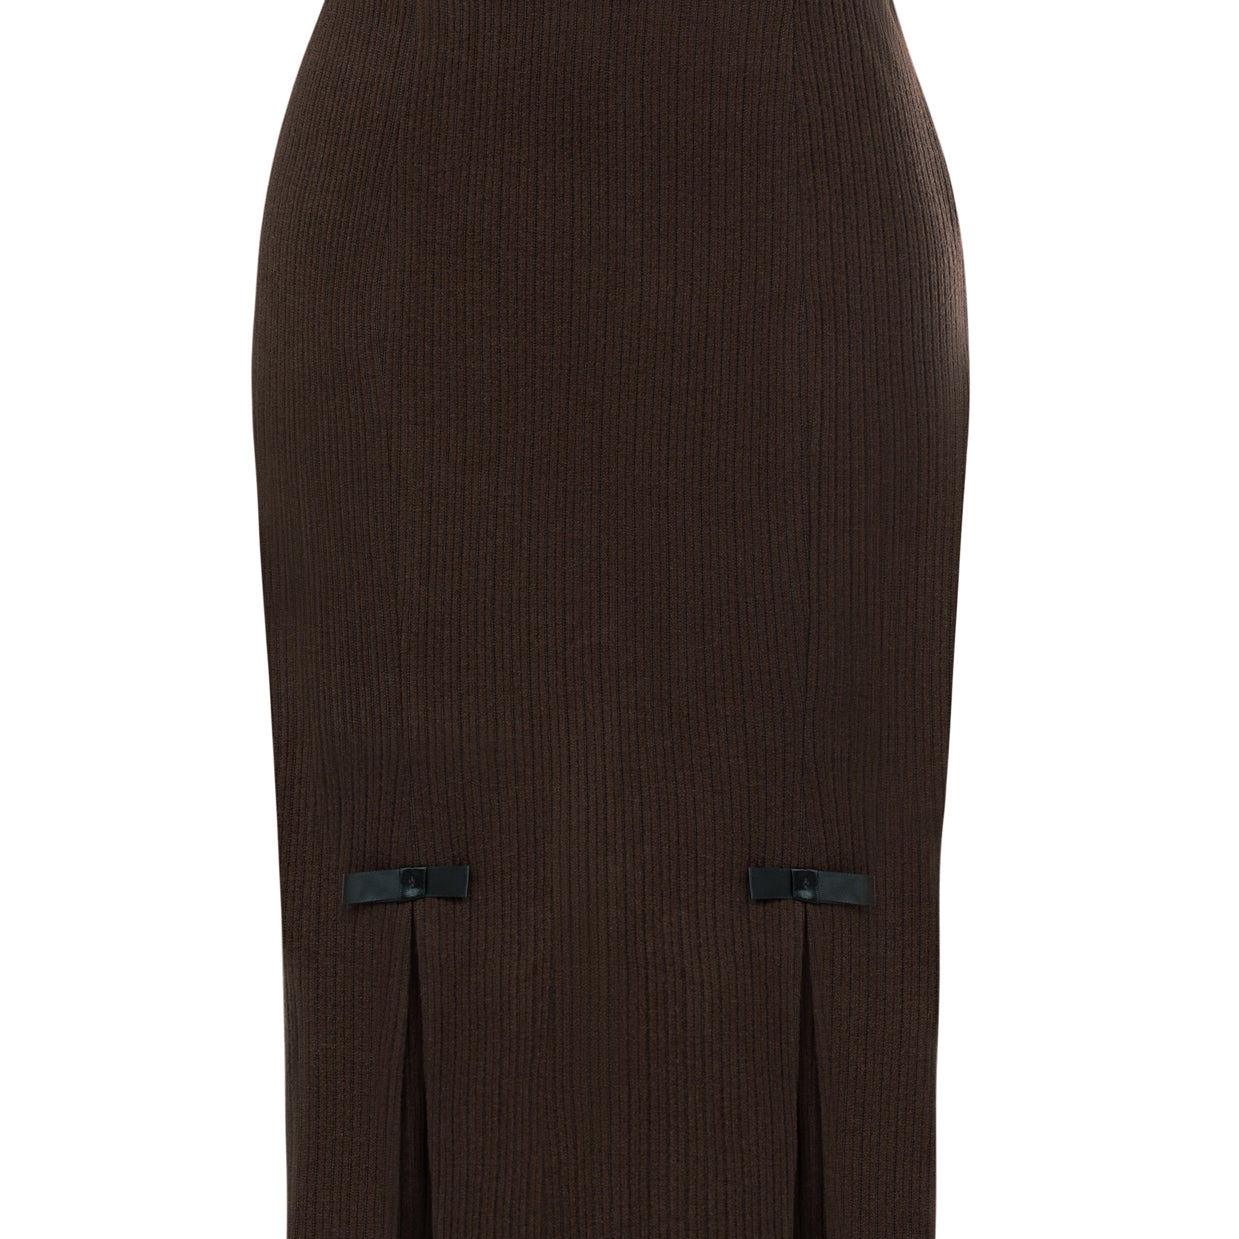 Vintage Corduroy Skirt High Waist Below Knee Bodycon Skirt